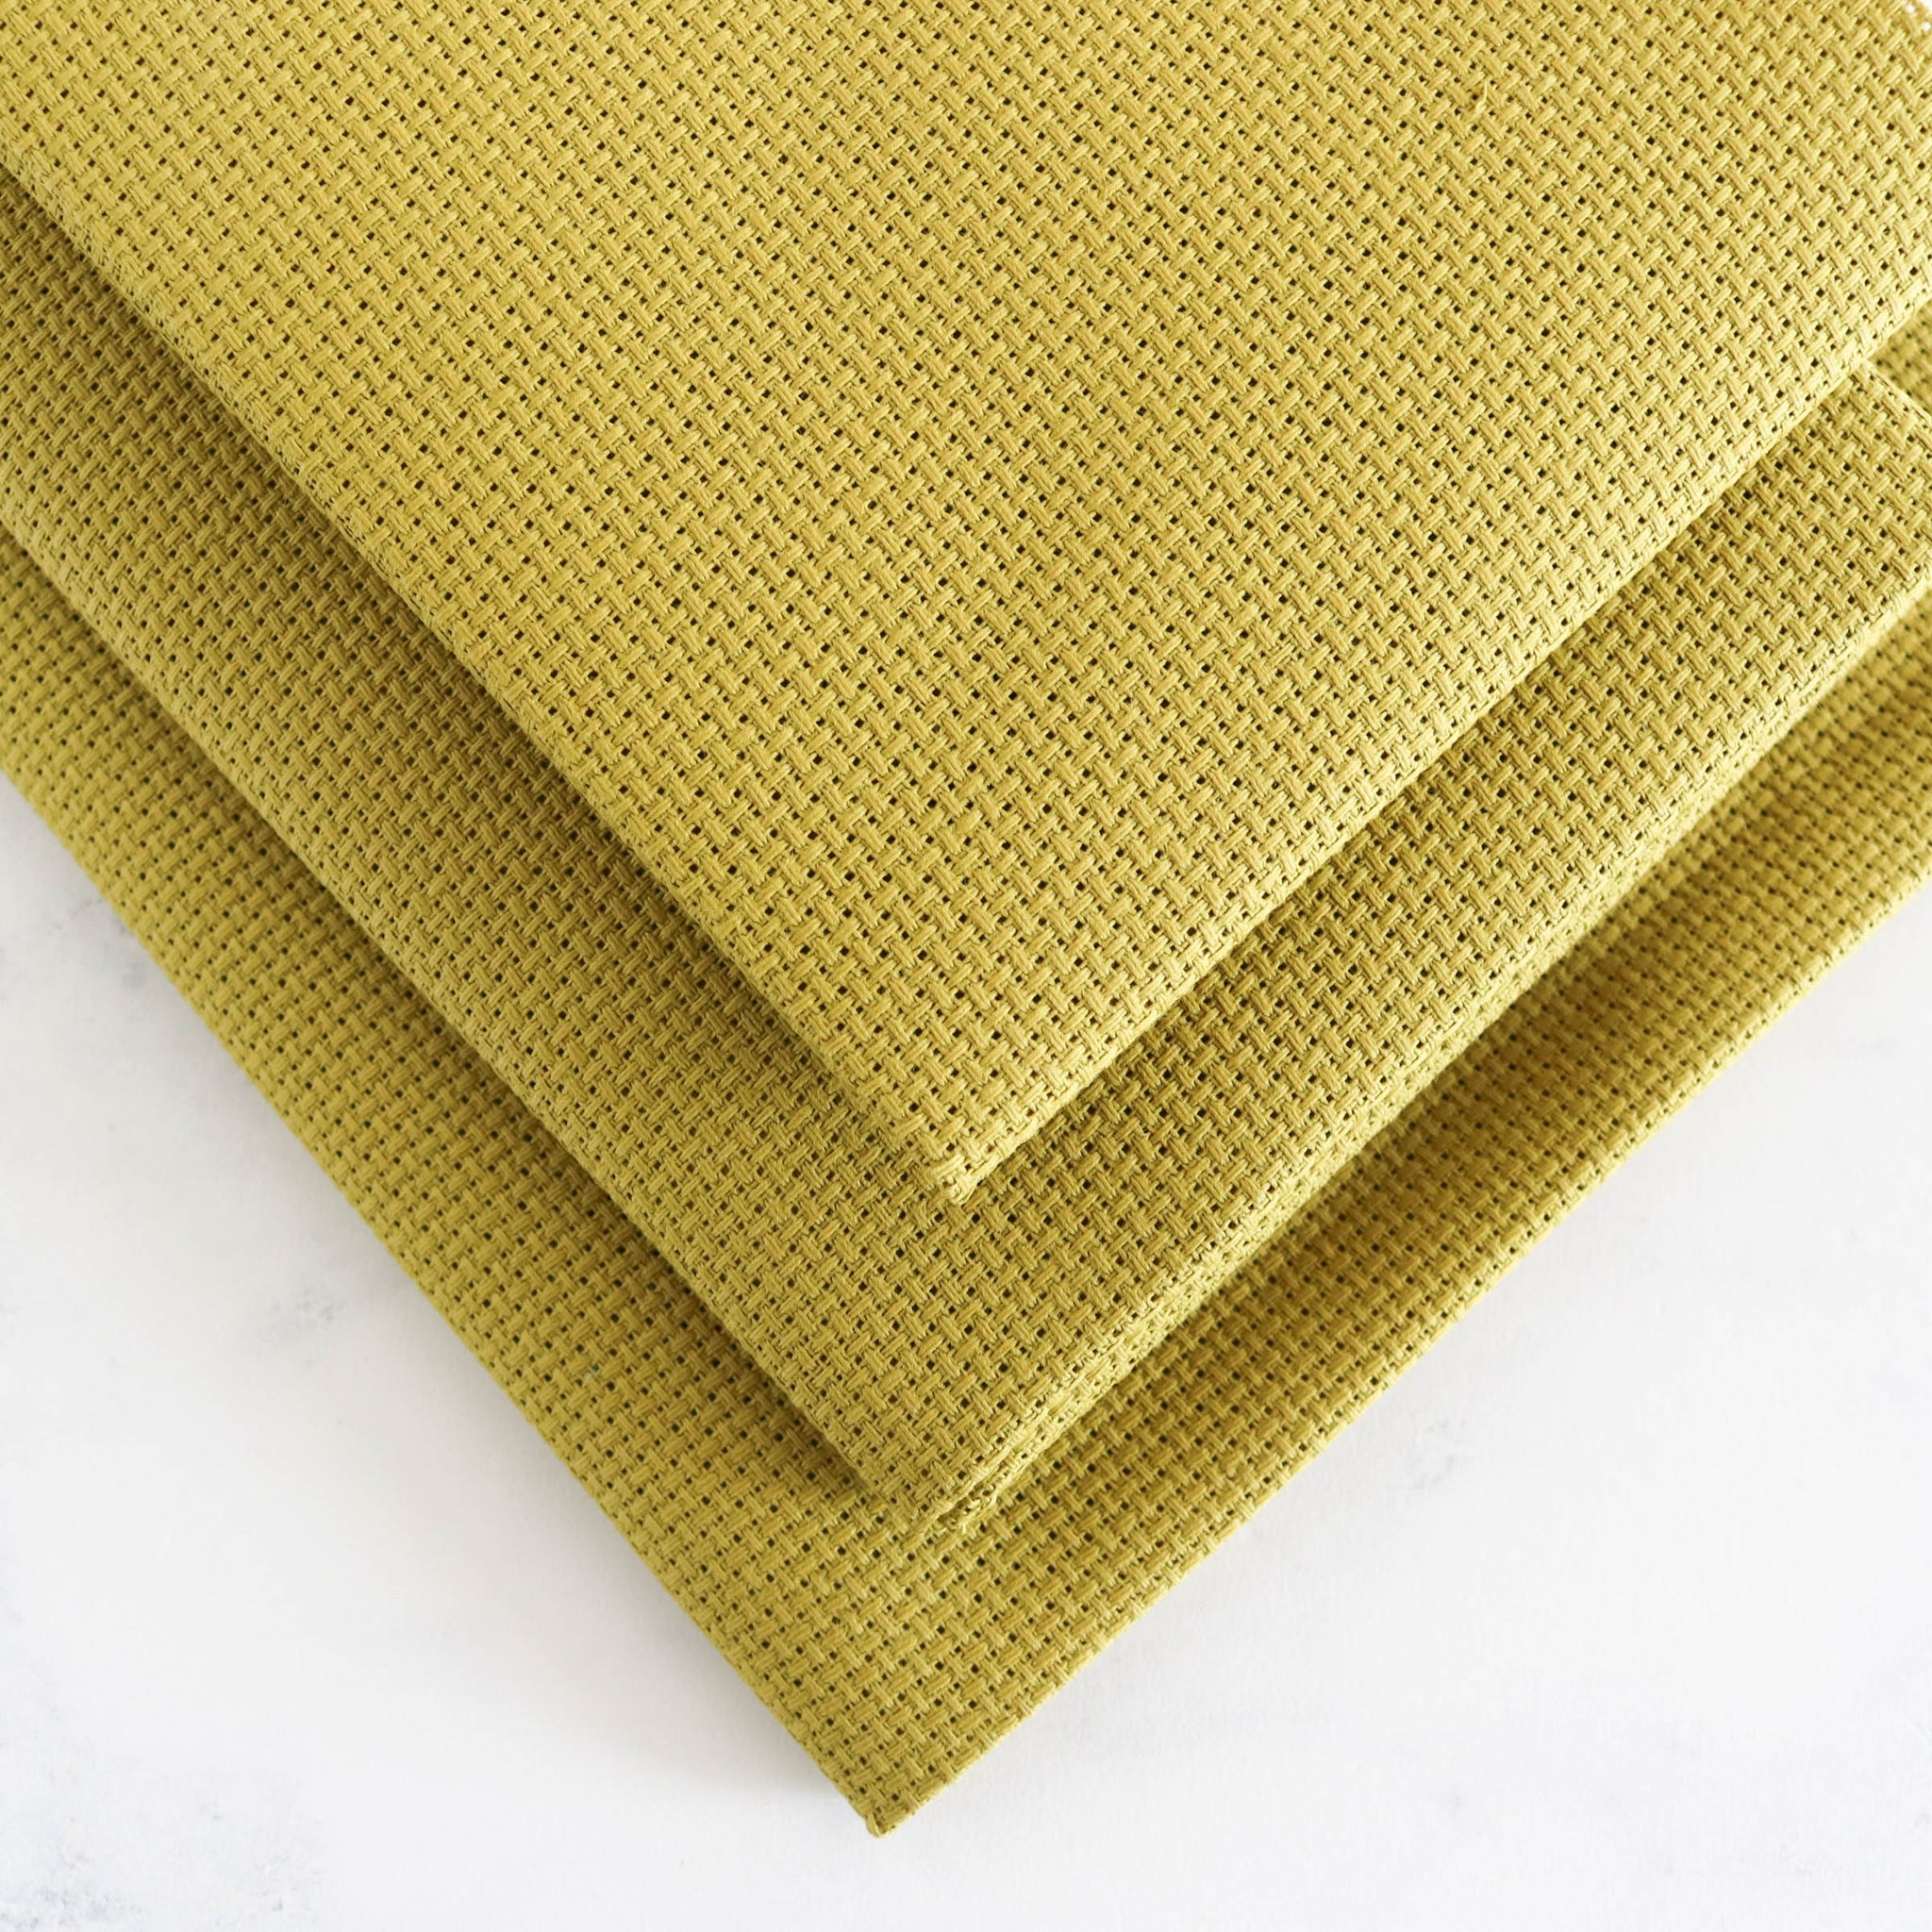 Riviera Olive Aida Cross Stitch Fabric - 14 count - Stitched Modern